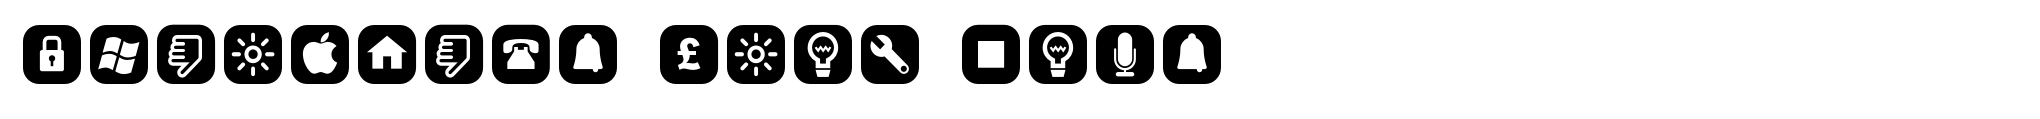 ClickBits Icon Pods image